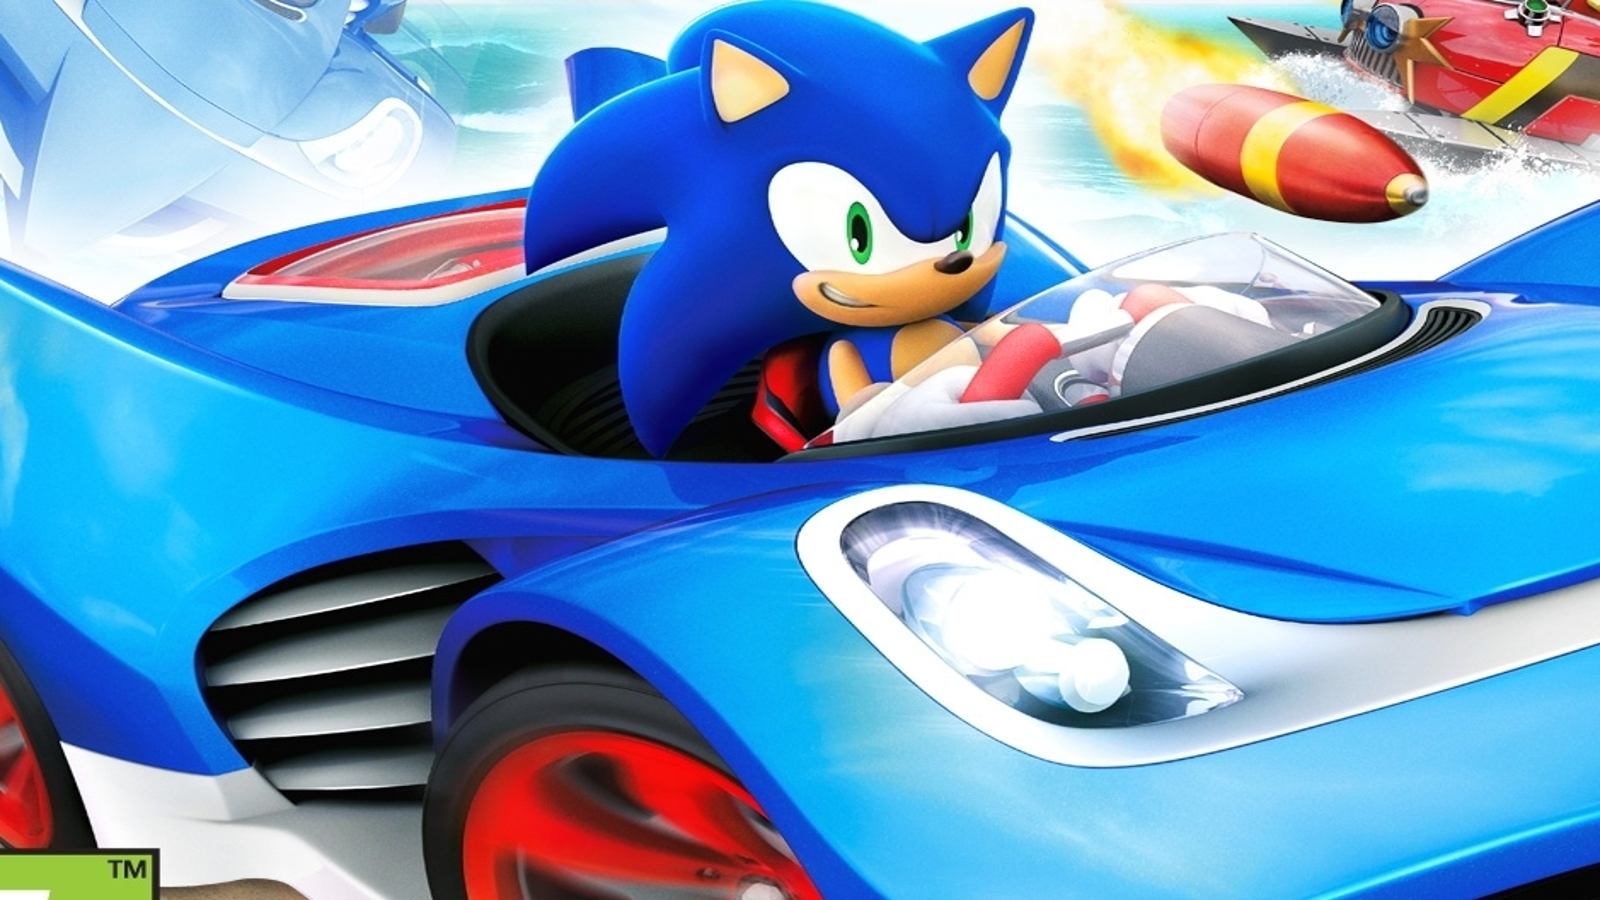 Jogo Xbox 360 Sonic All-Stars Racing